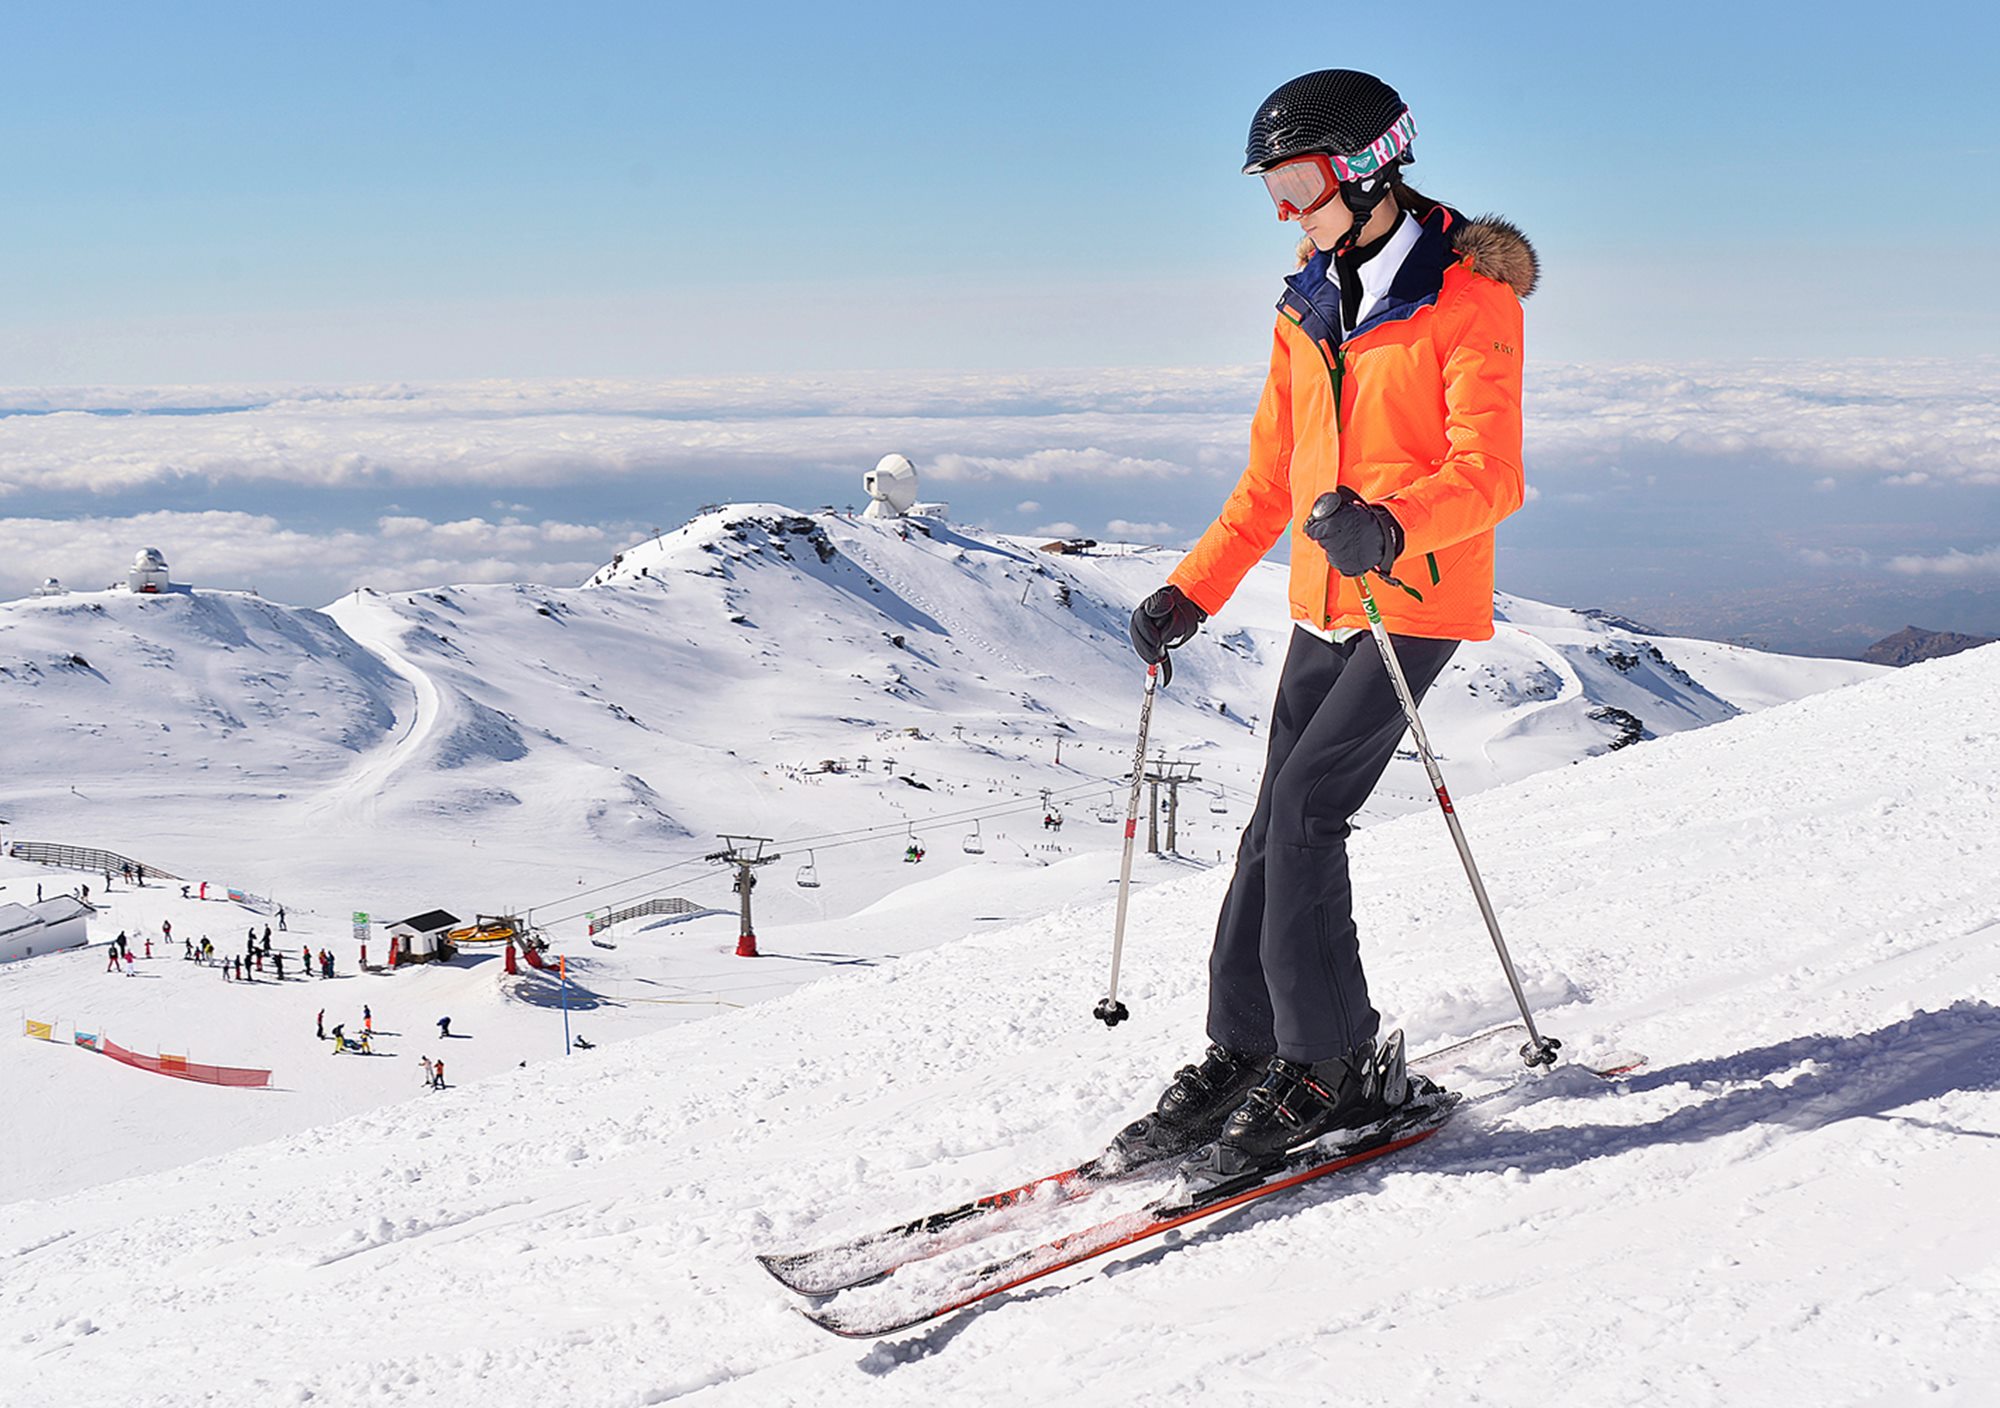 Clases privadas de esquí ski en Sierra Nevada para grupos por un monitor profesor oficial Granada